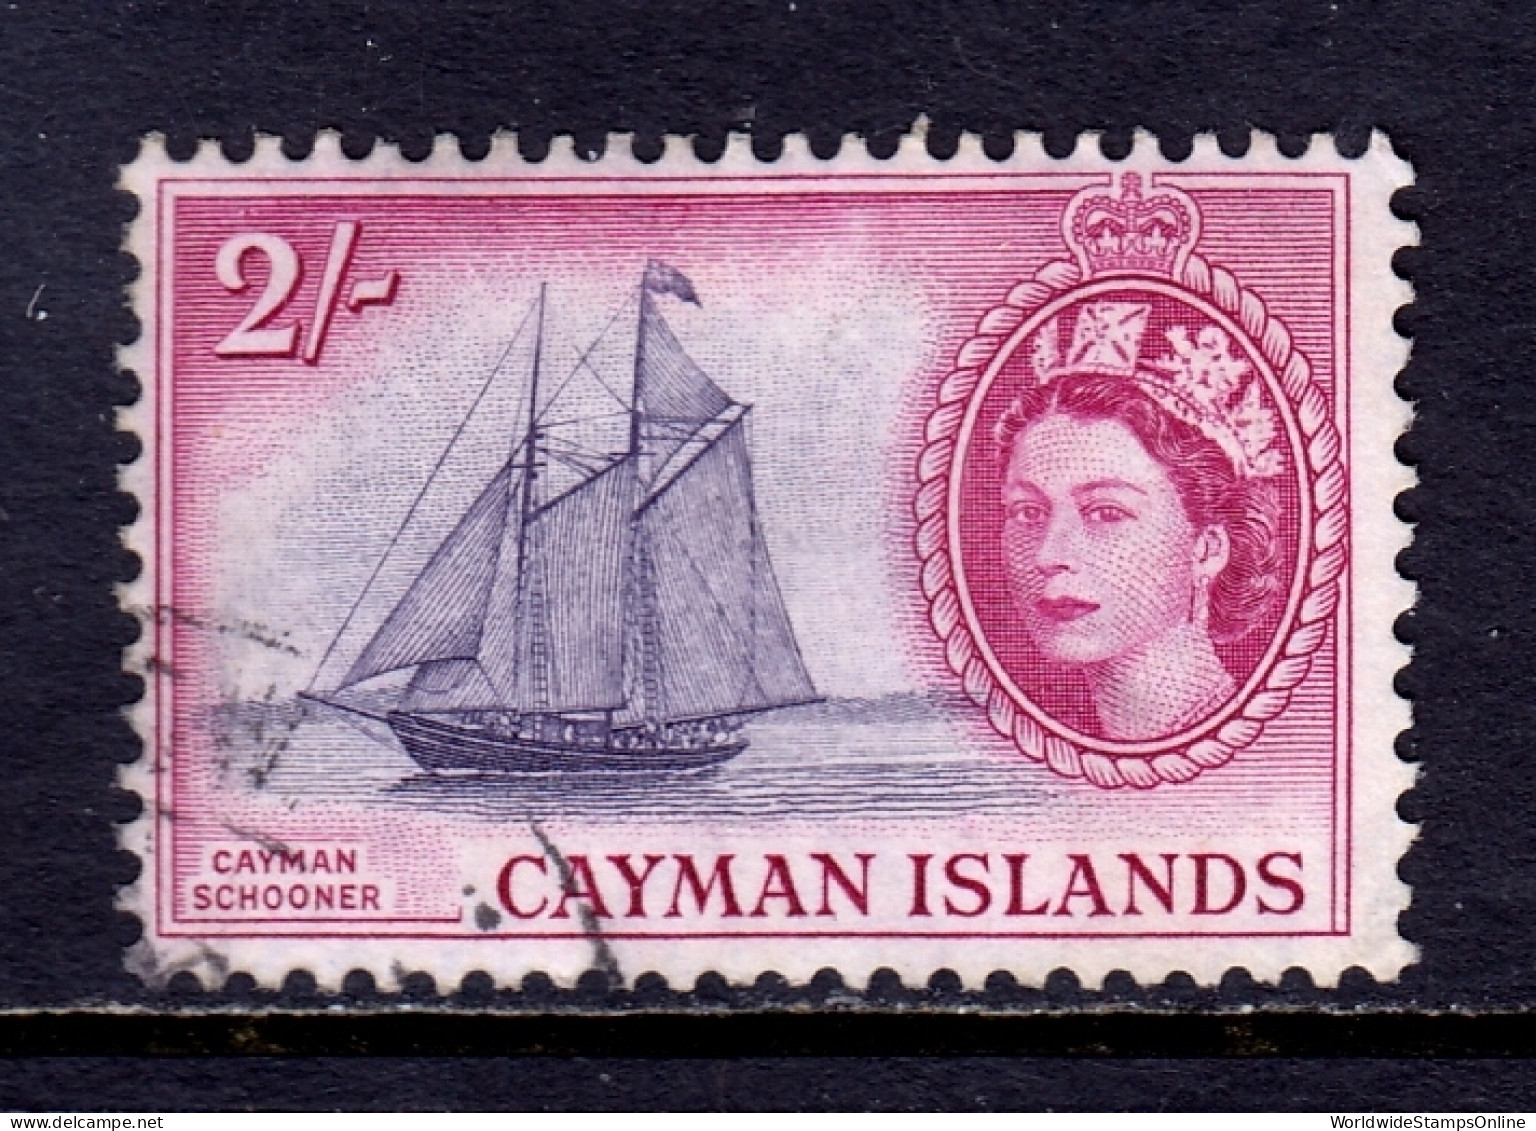 Cayman Islands - Scott #146 - Used - SCV $11 - Cayman Islands